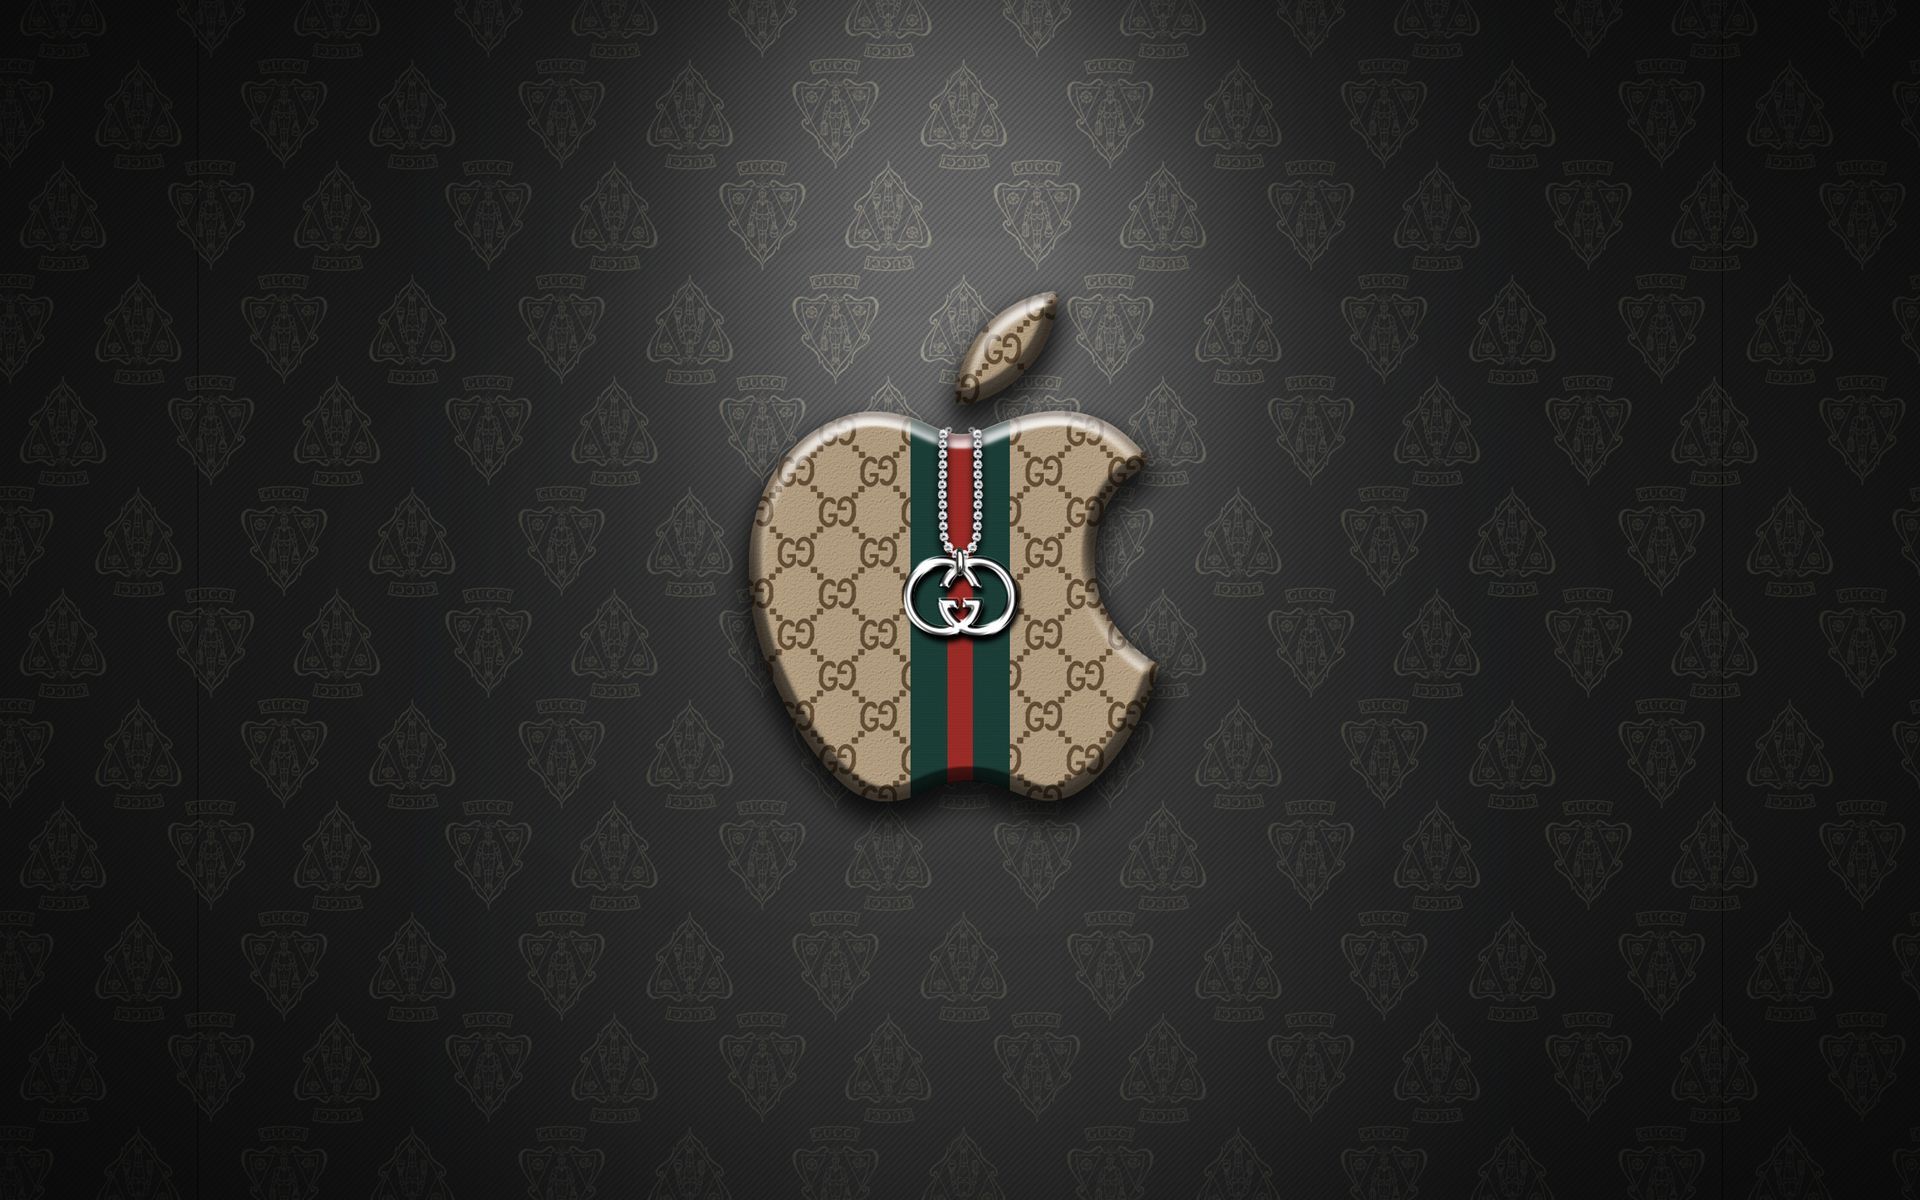 Gucci apple logo s on